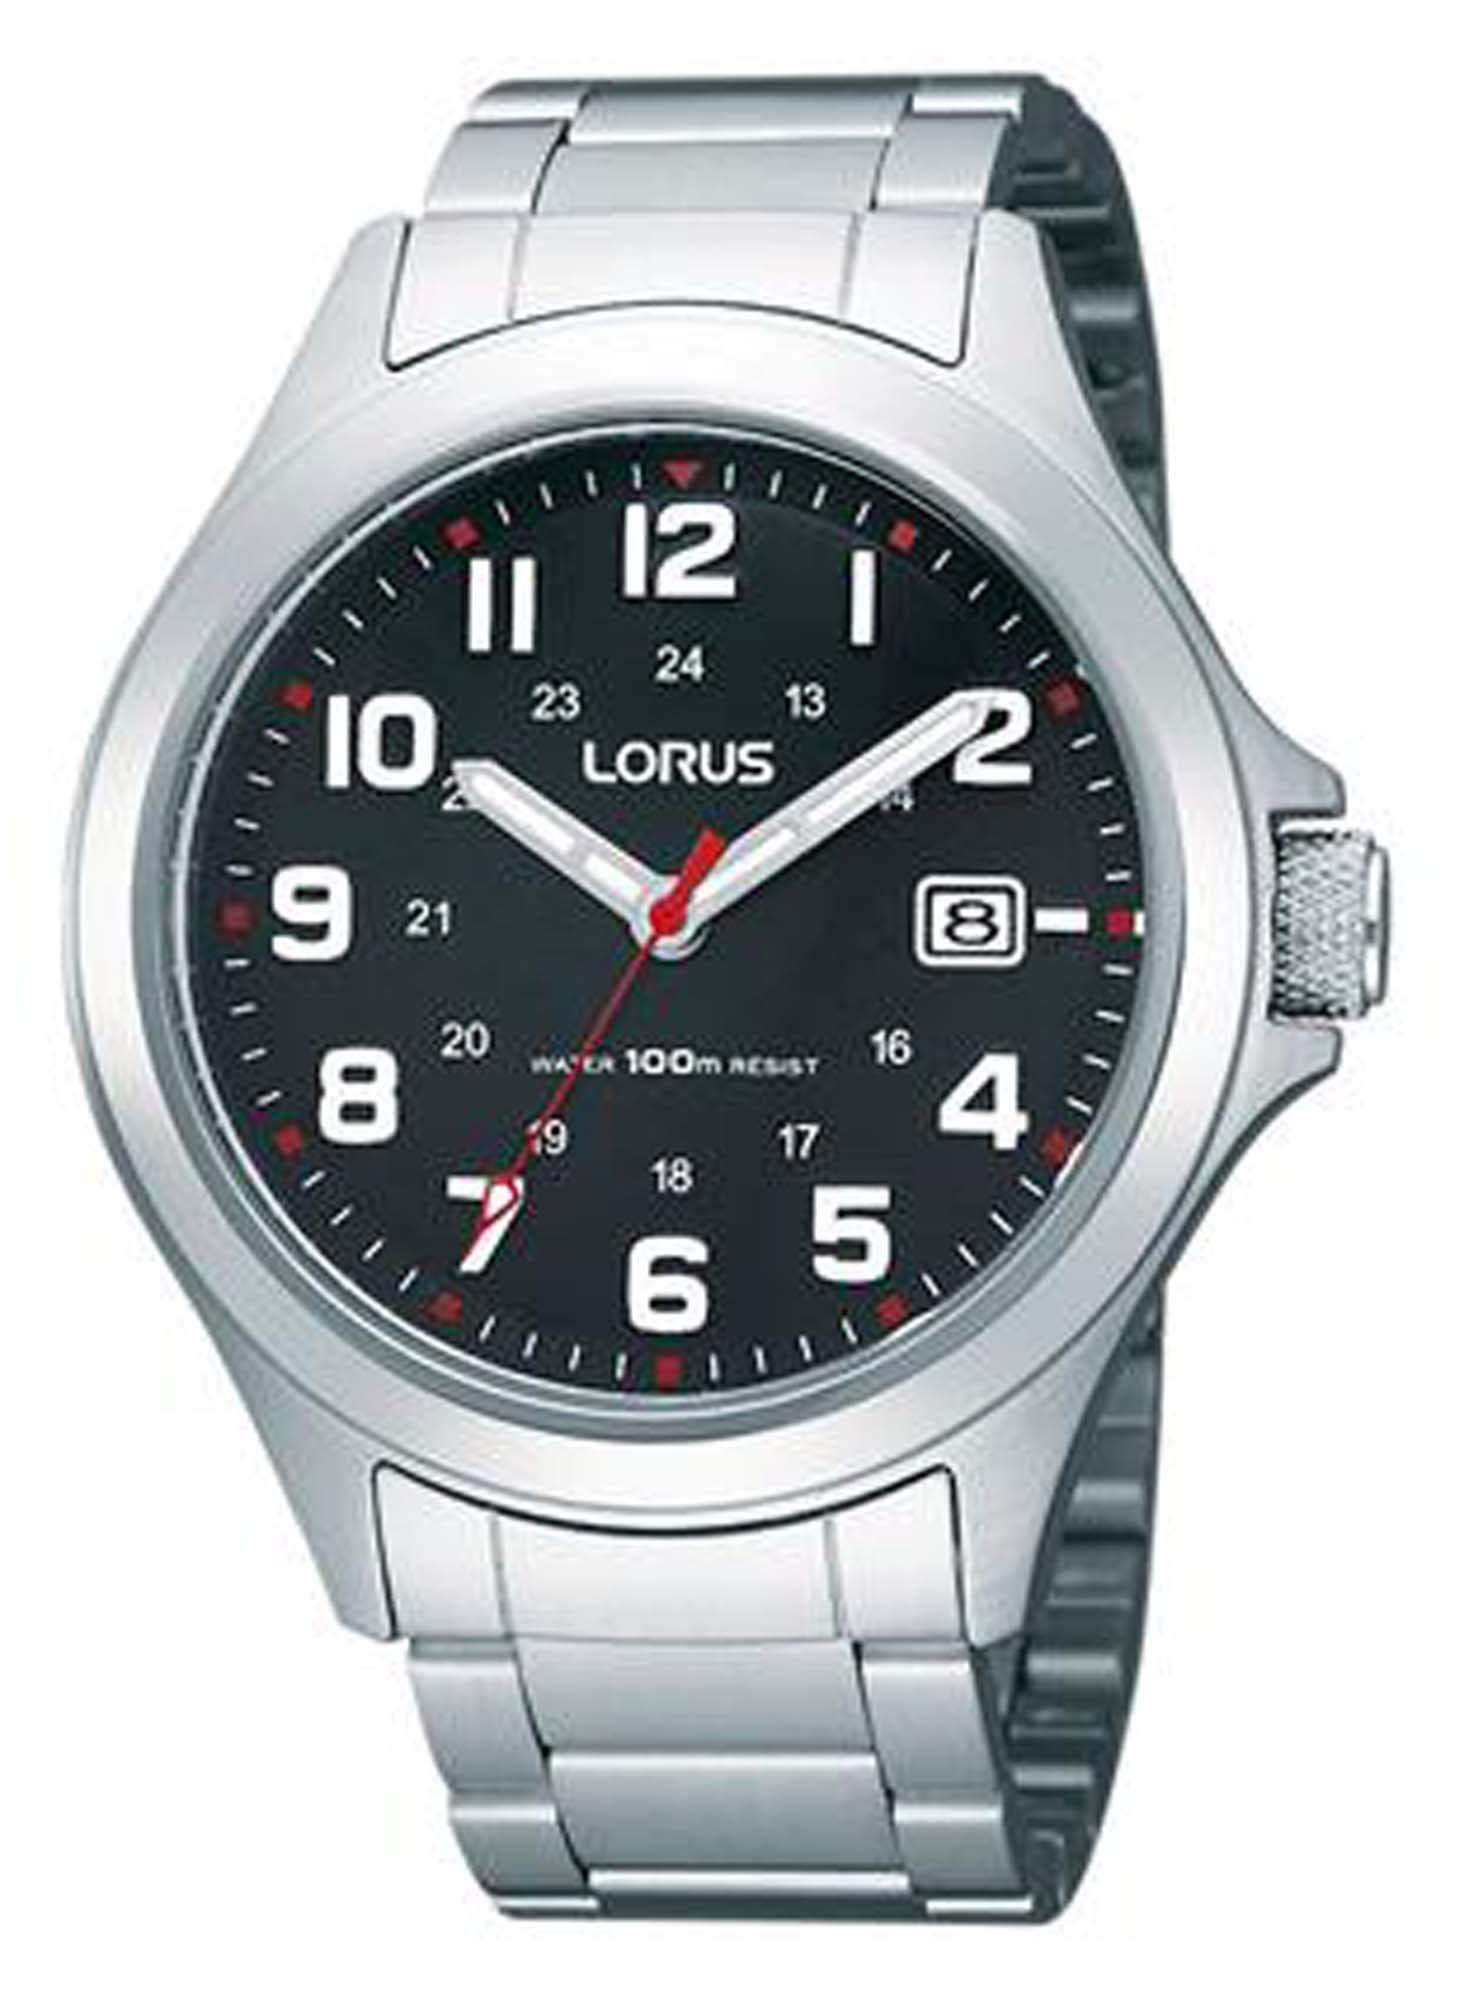 Lorus Sport Man Mens Analog Quartz Watch with Stainless Steel Bracelet RXH01IX5 Silver